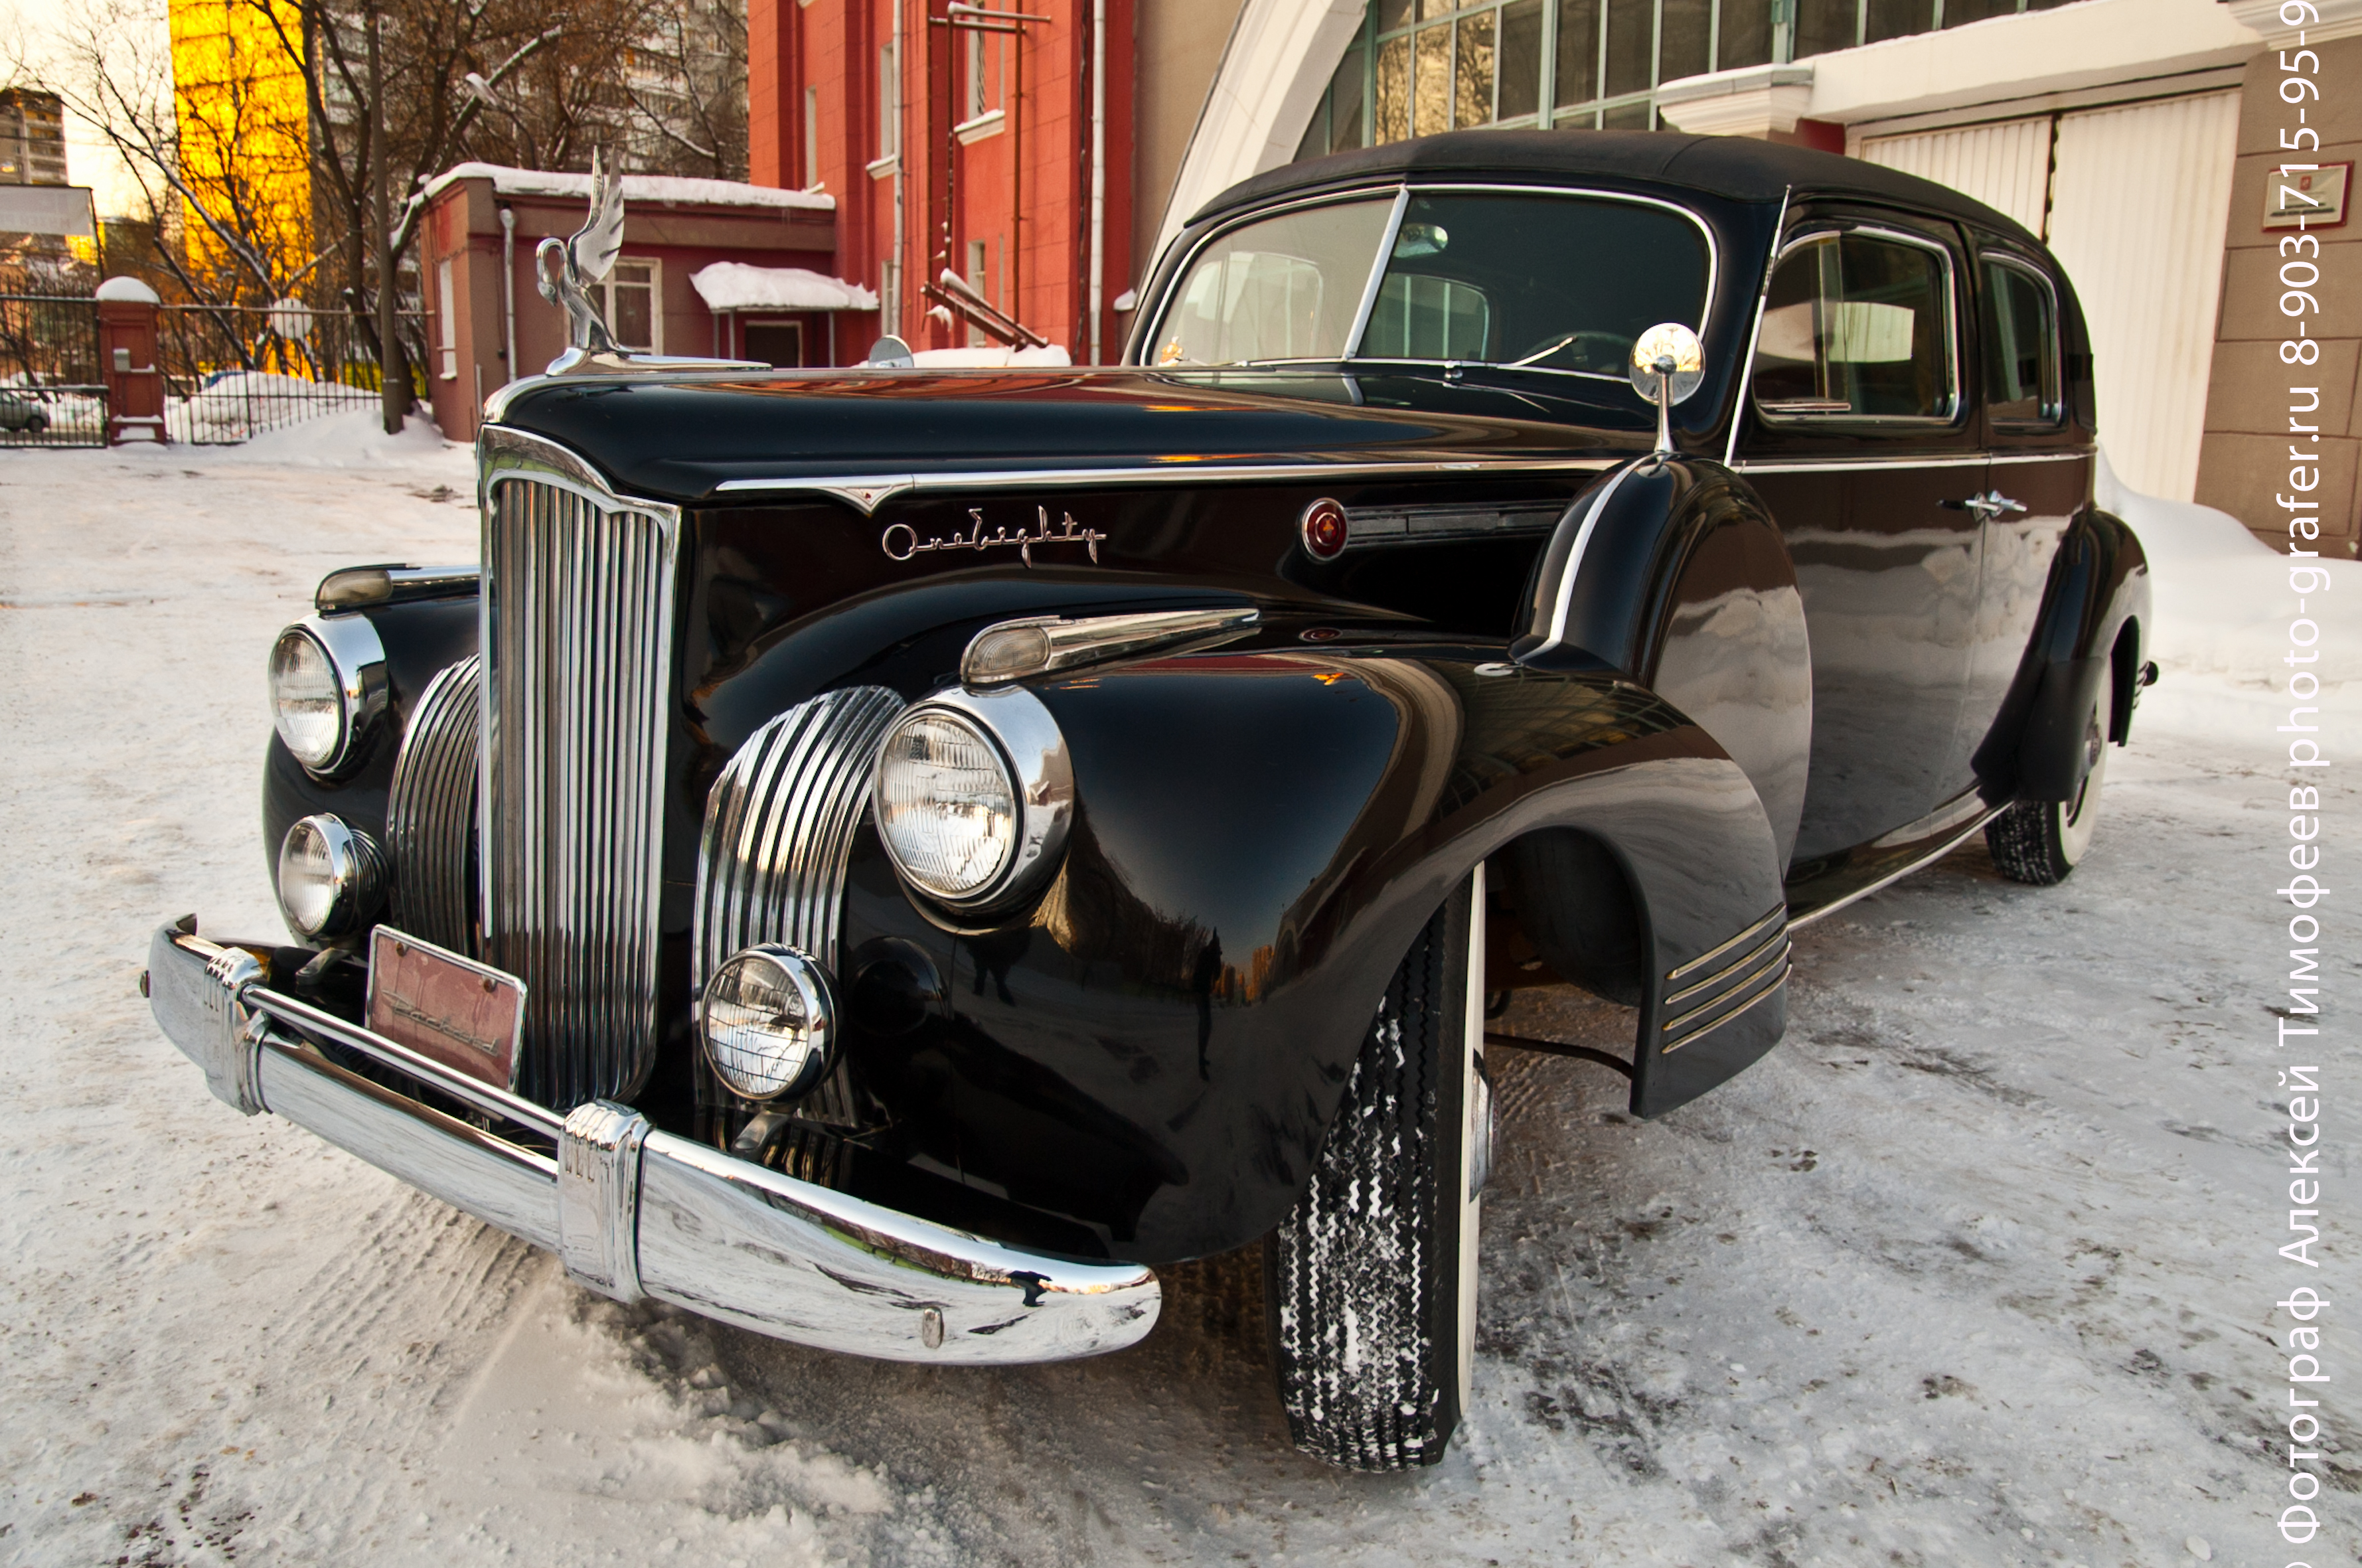 1941 Packard 180, Packard для съёмок, Packard в аренду, старинное авто в аренду, довоенный автомобиль в аренду, g-car